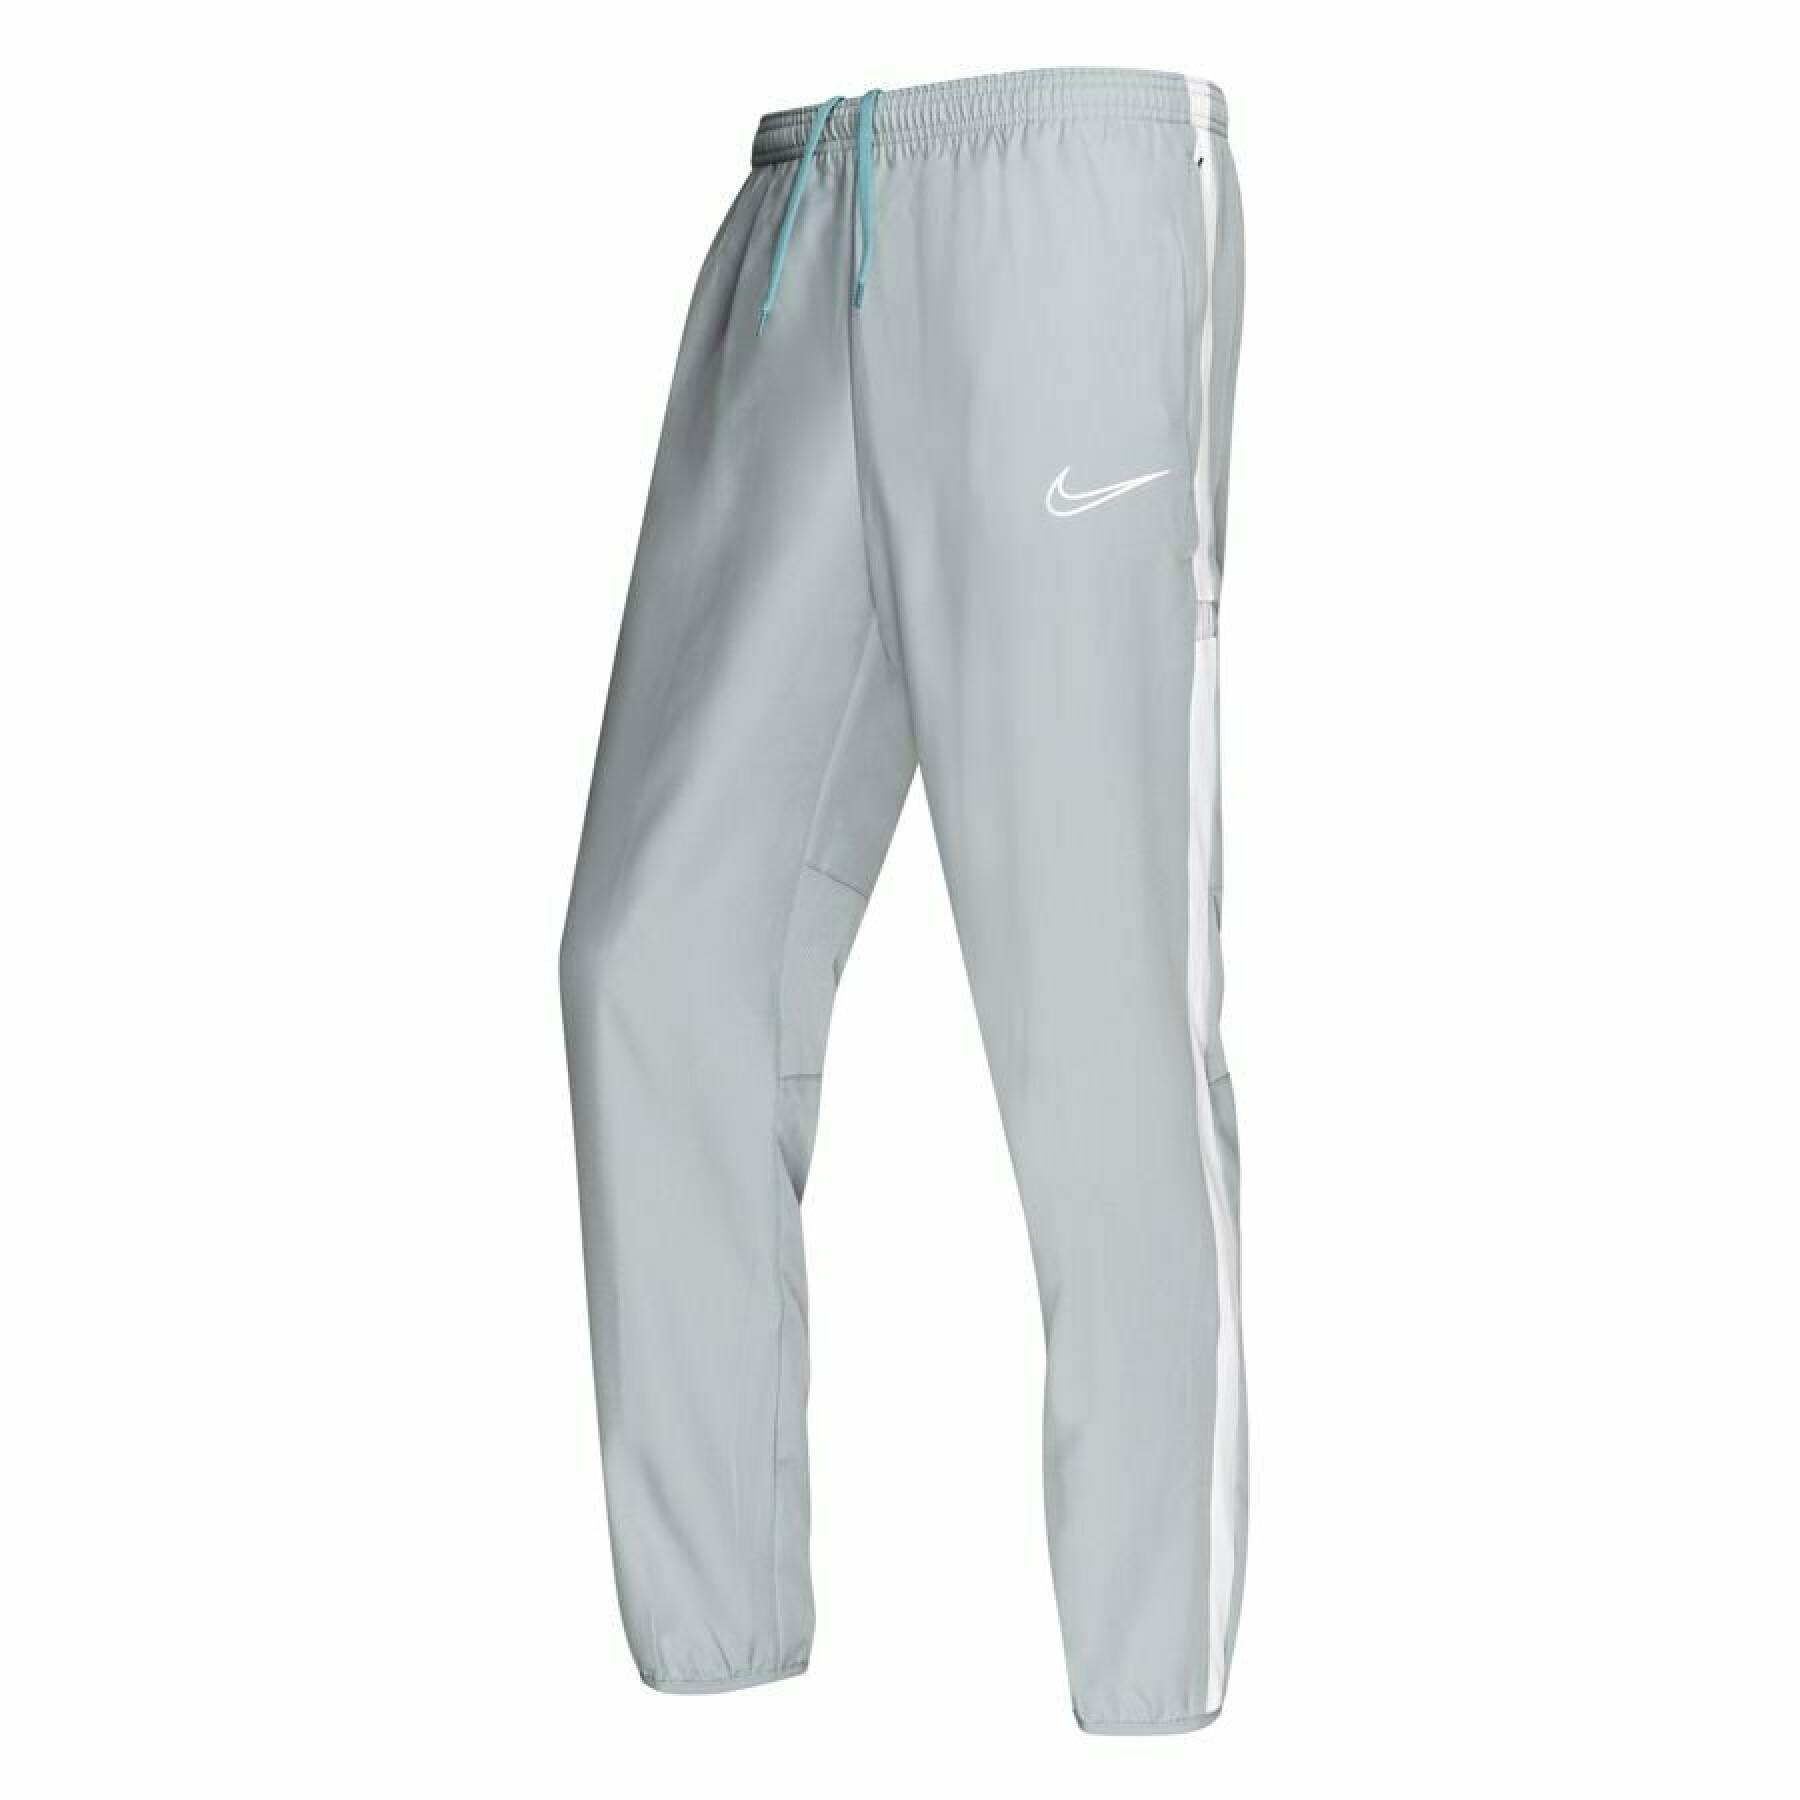 Pantalones Nike Dry ACD